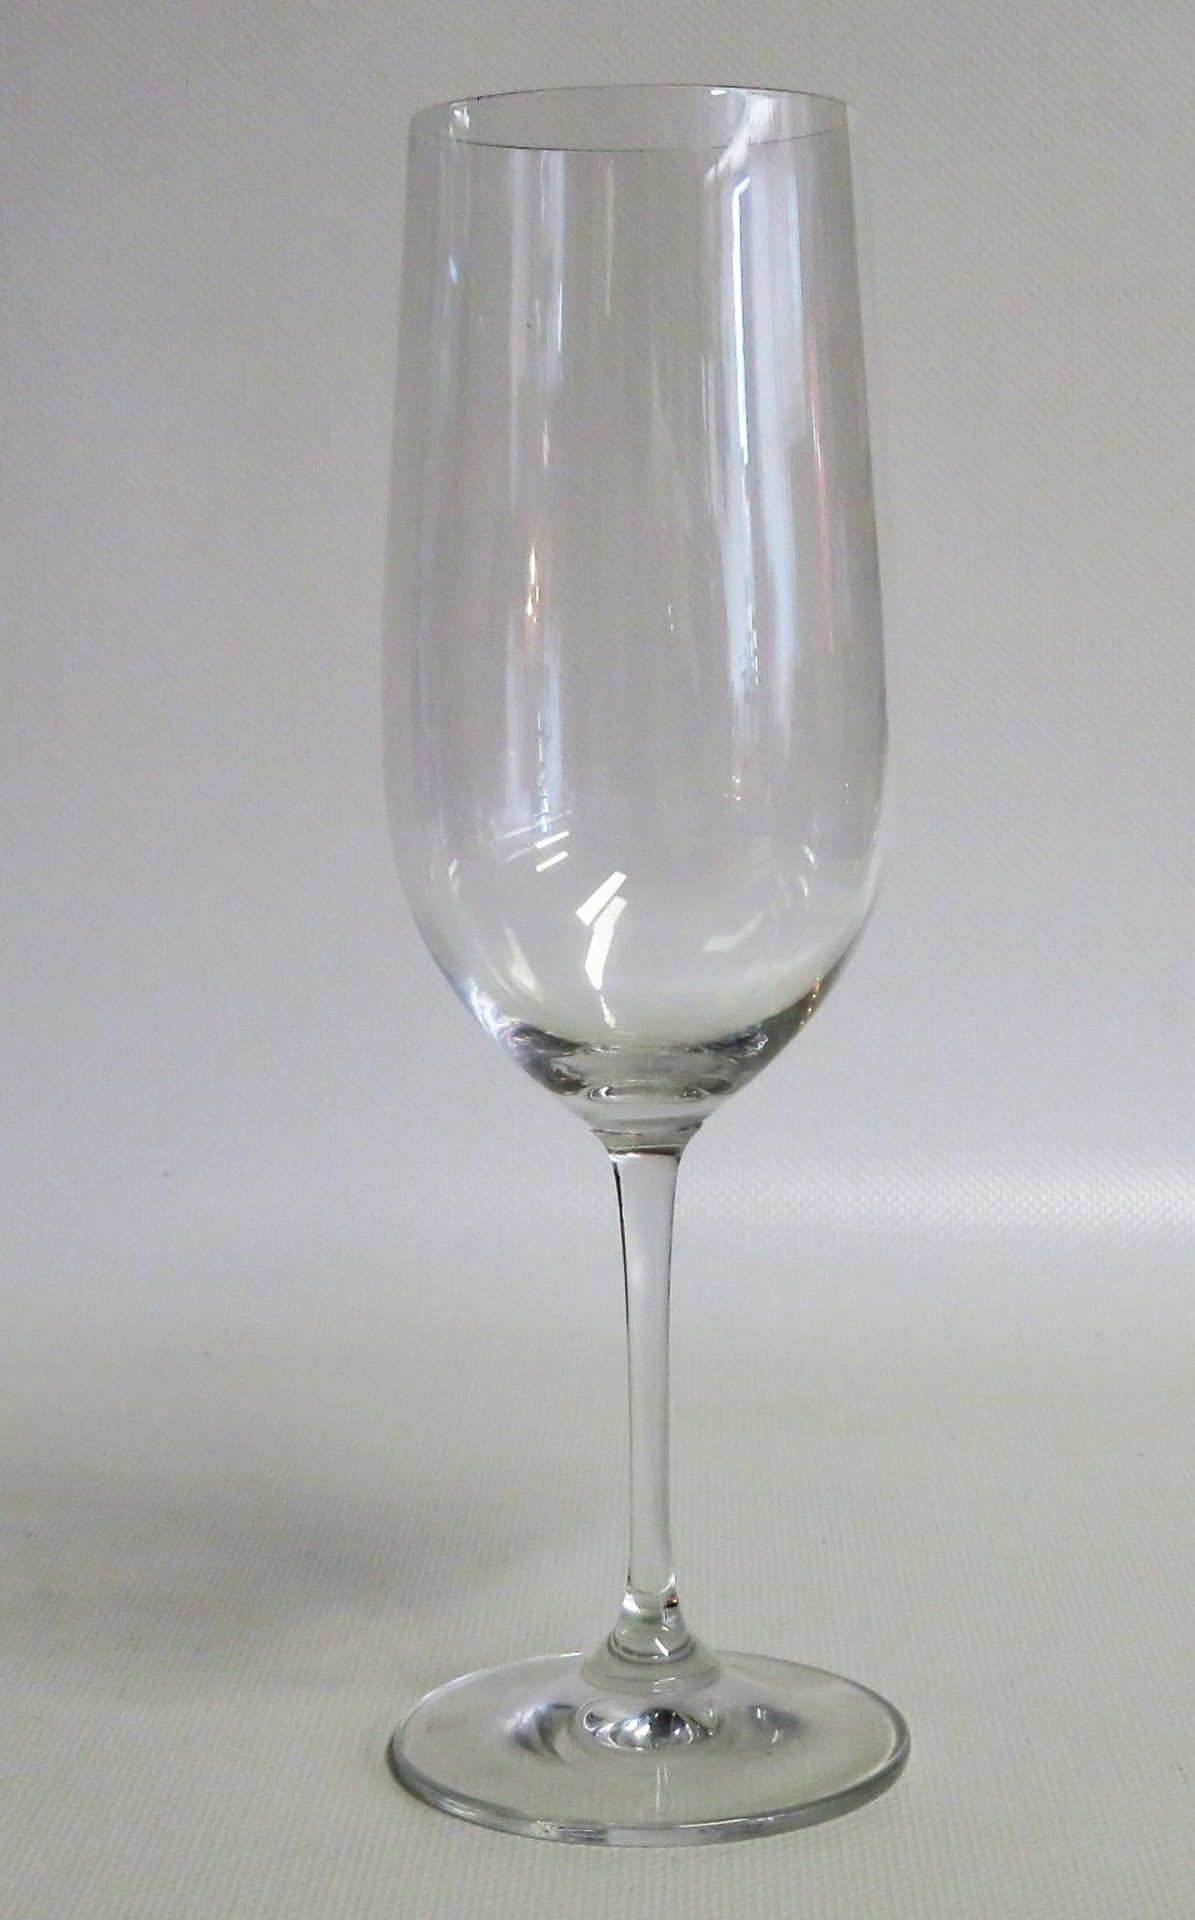 6 Riedel Gläser, farbloses Glas, gem., ca. h 22,8 cm.